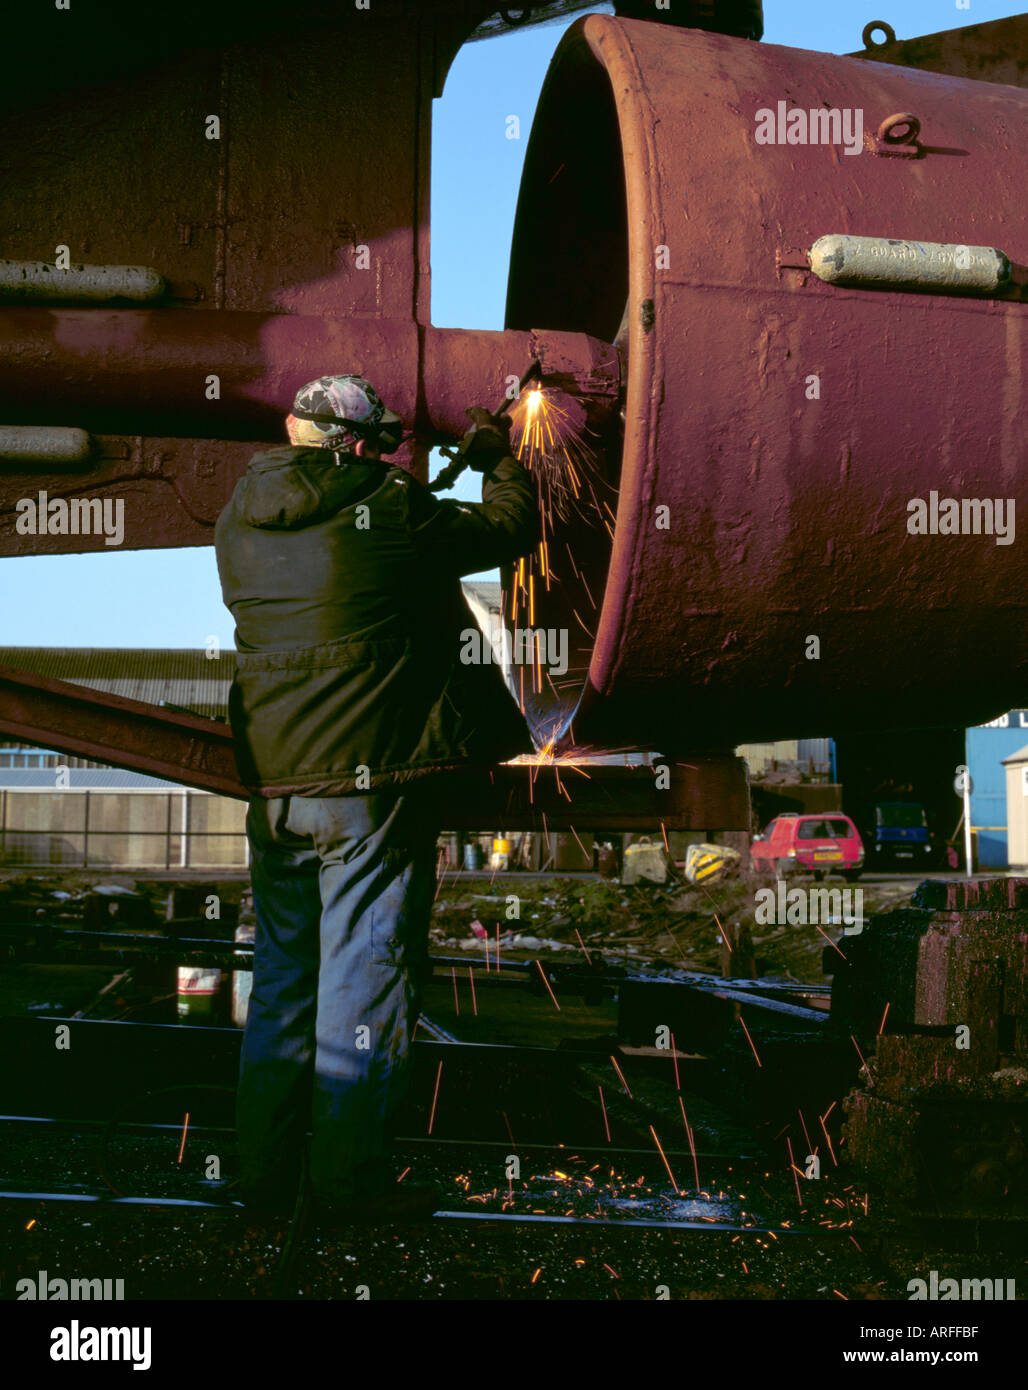 Man using an oxyacetylene burner on a ship's propellor shaft, in a ship repair yard. Stock Photo